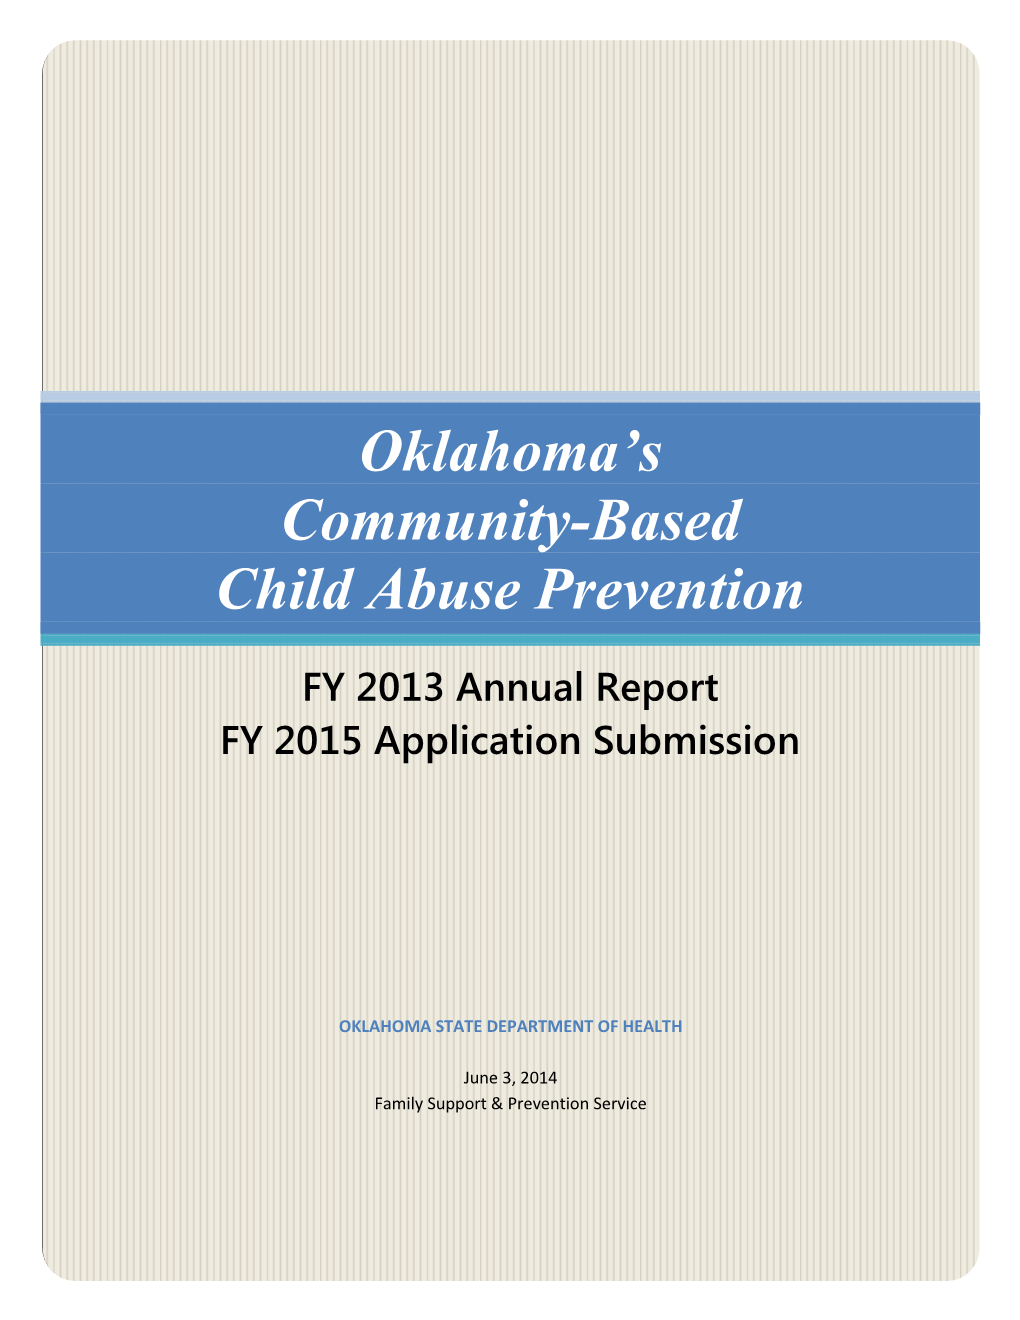 Oklahoma's Community-Based Child Abuse Prevention